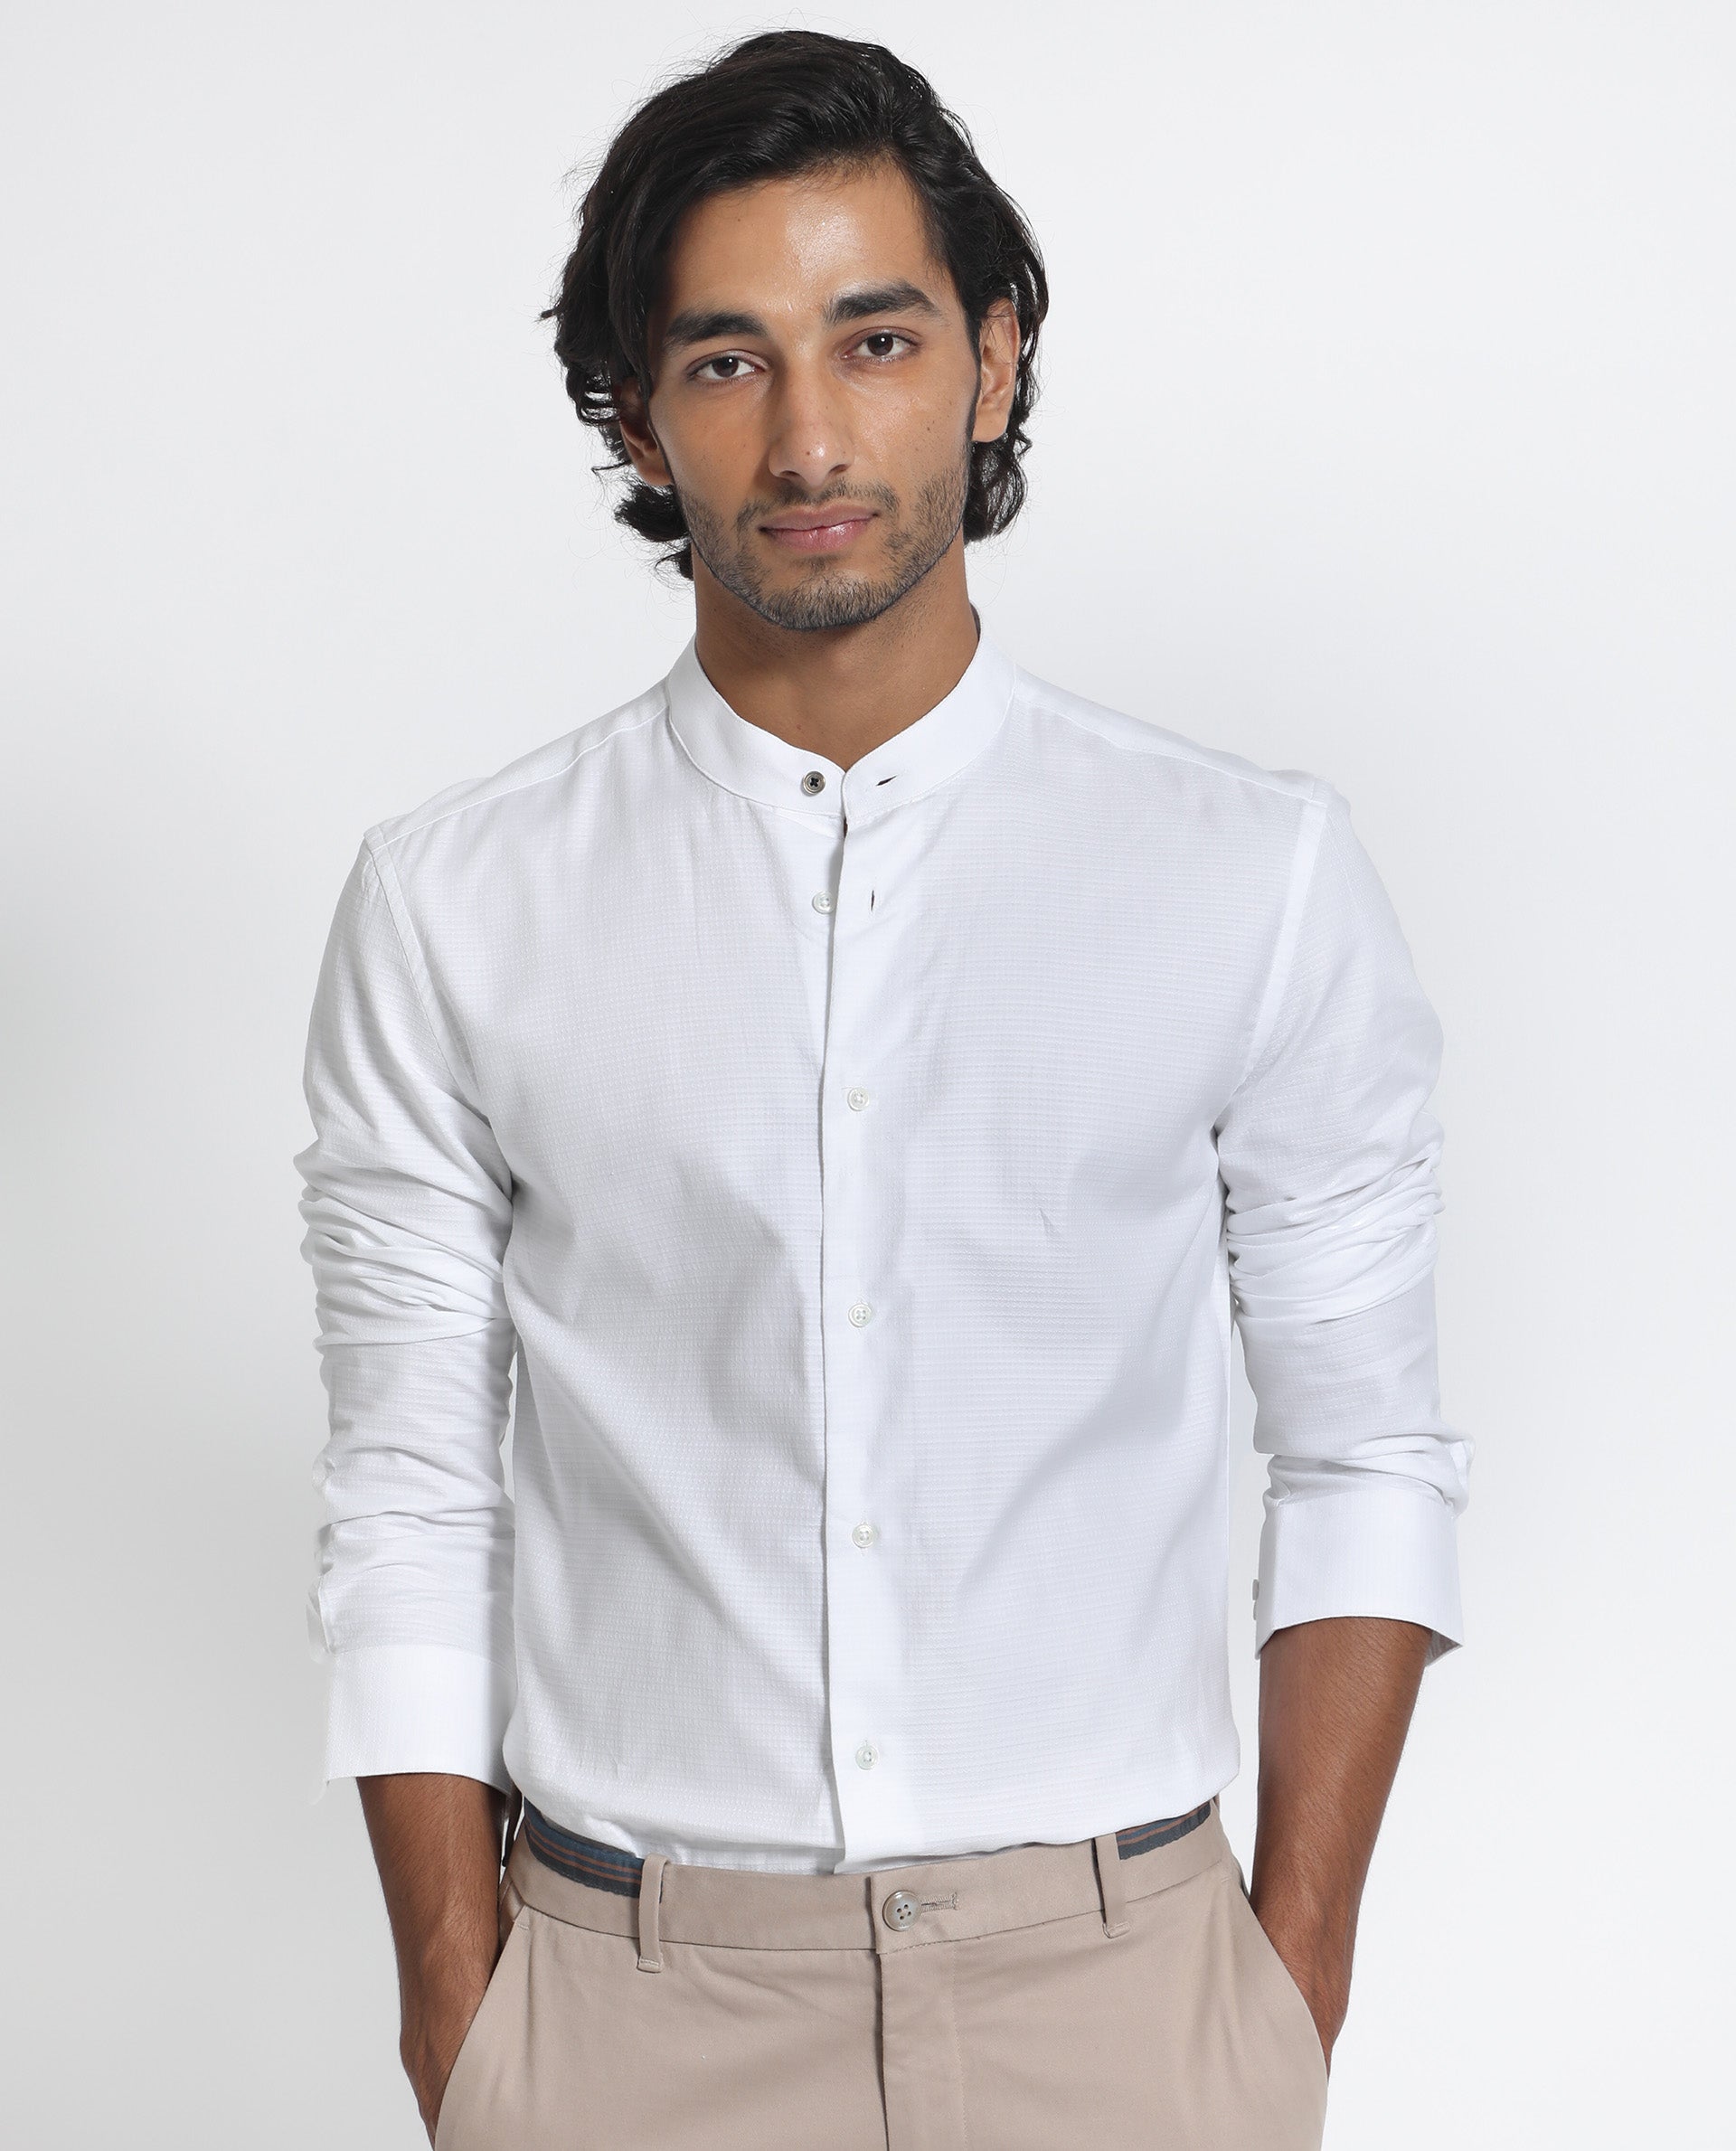 White Mandarin Collar Shirt